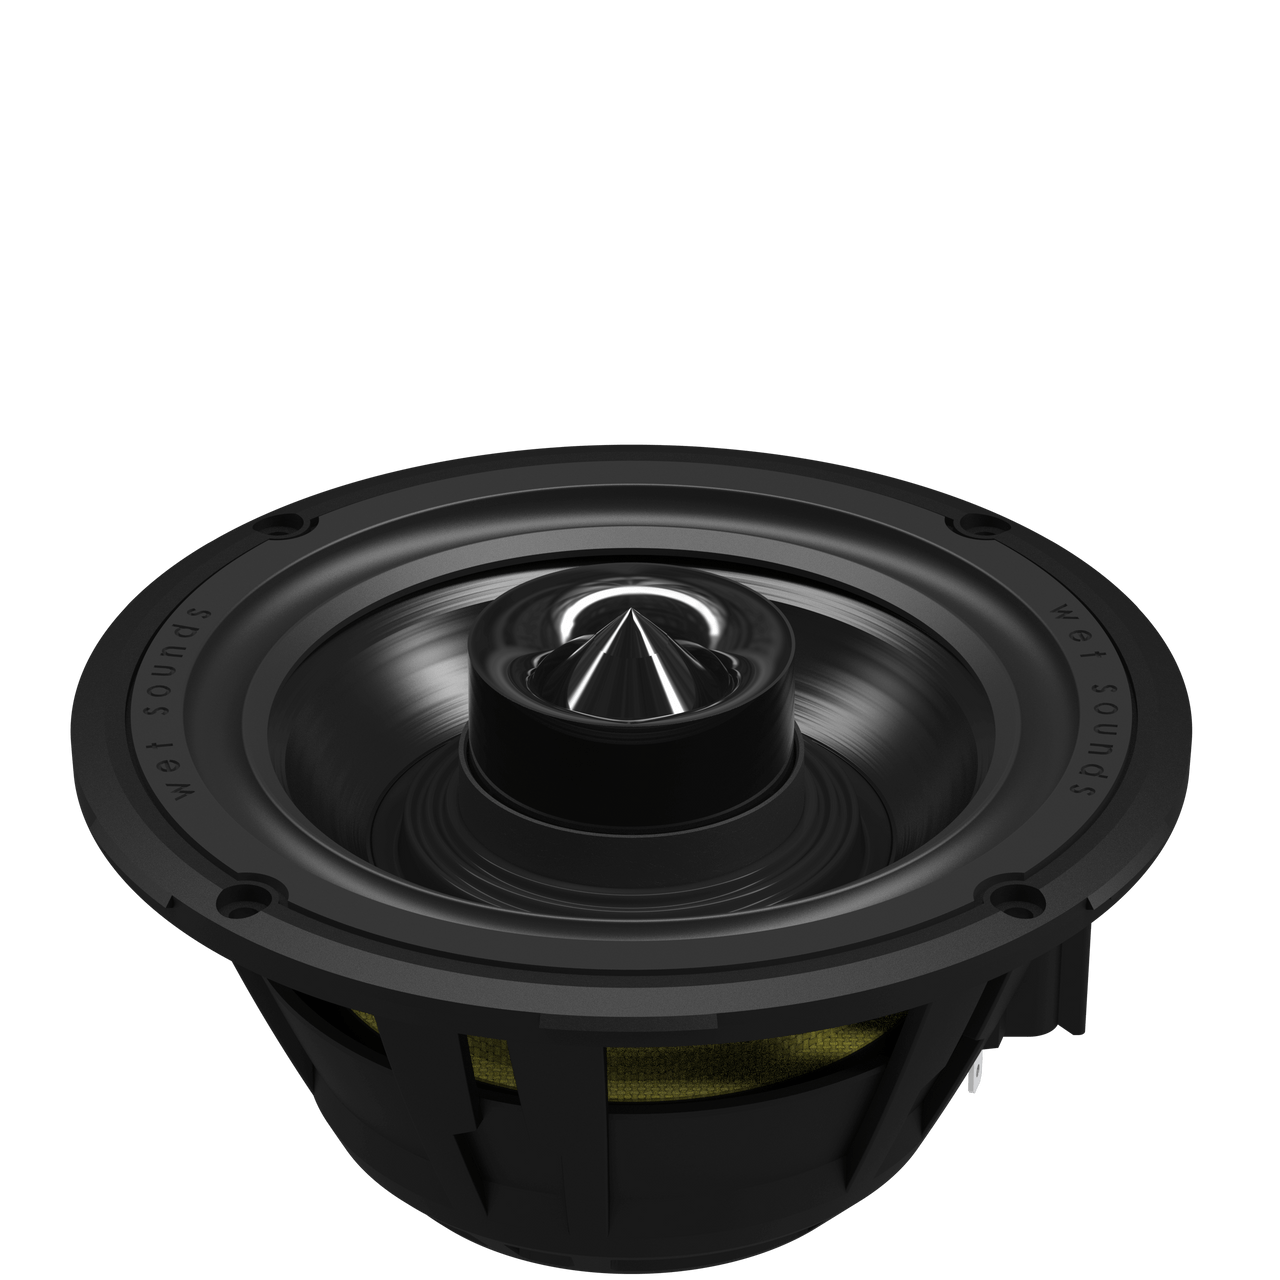 Wet Sounds ZERO 8 XZ-W Wet Sounds High-Output 6.5" Marine Coaxial Speakers